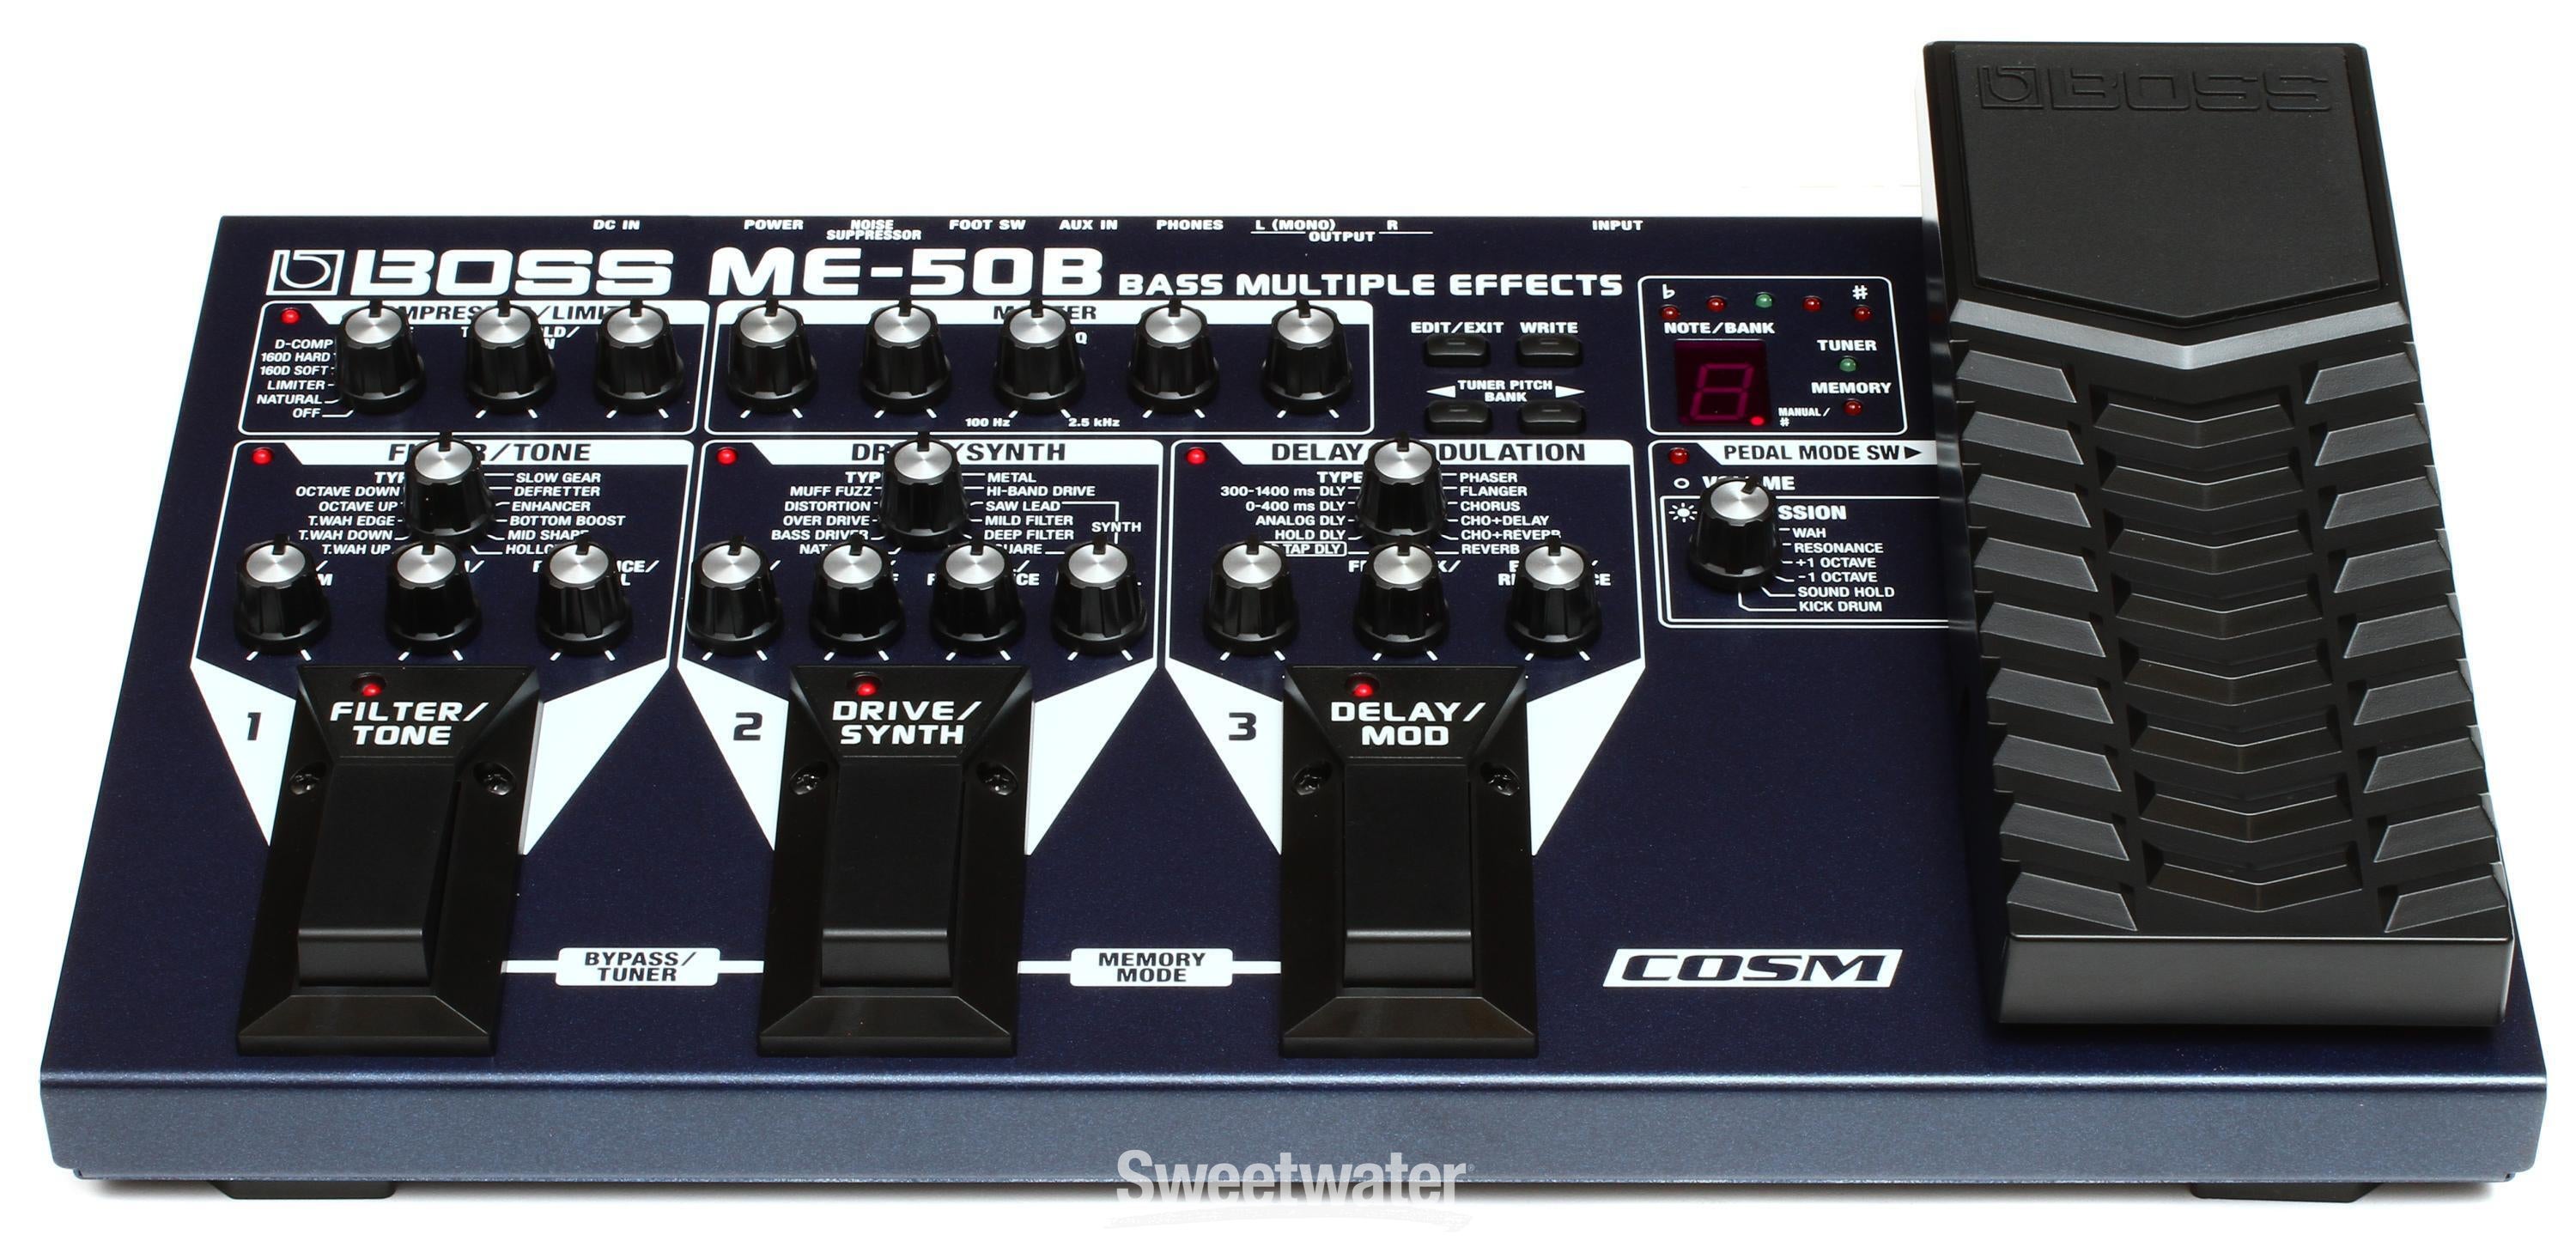 Boss ME-50B Bass Multi-effects Pedal